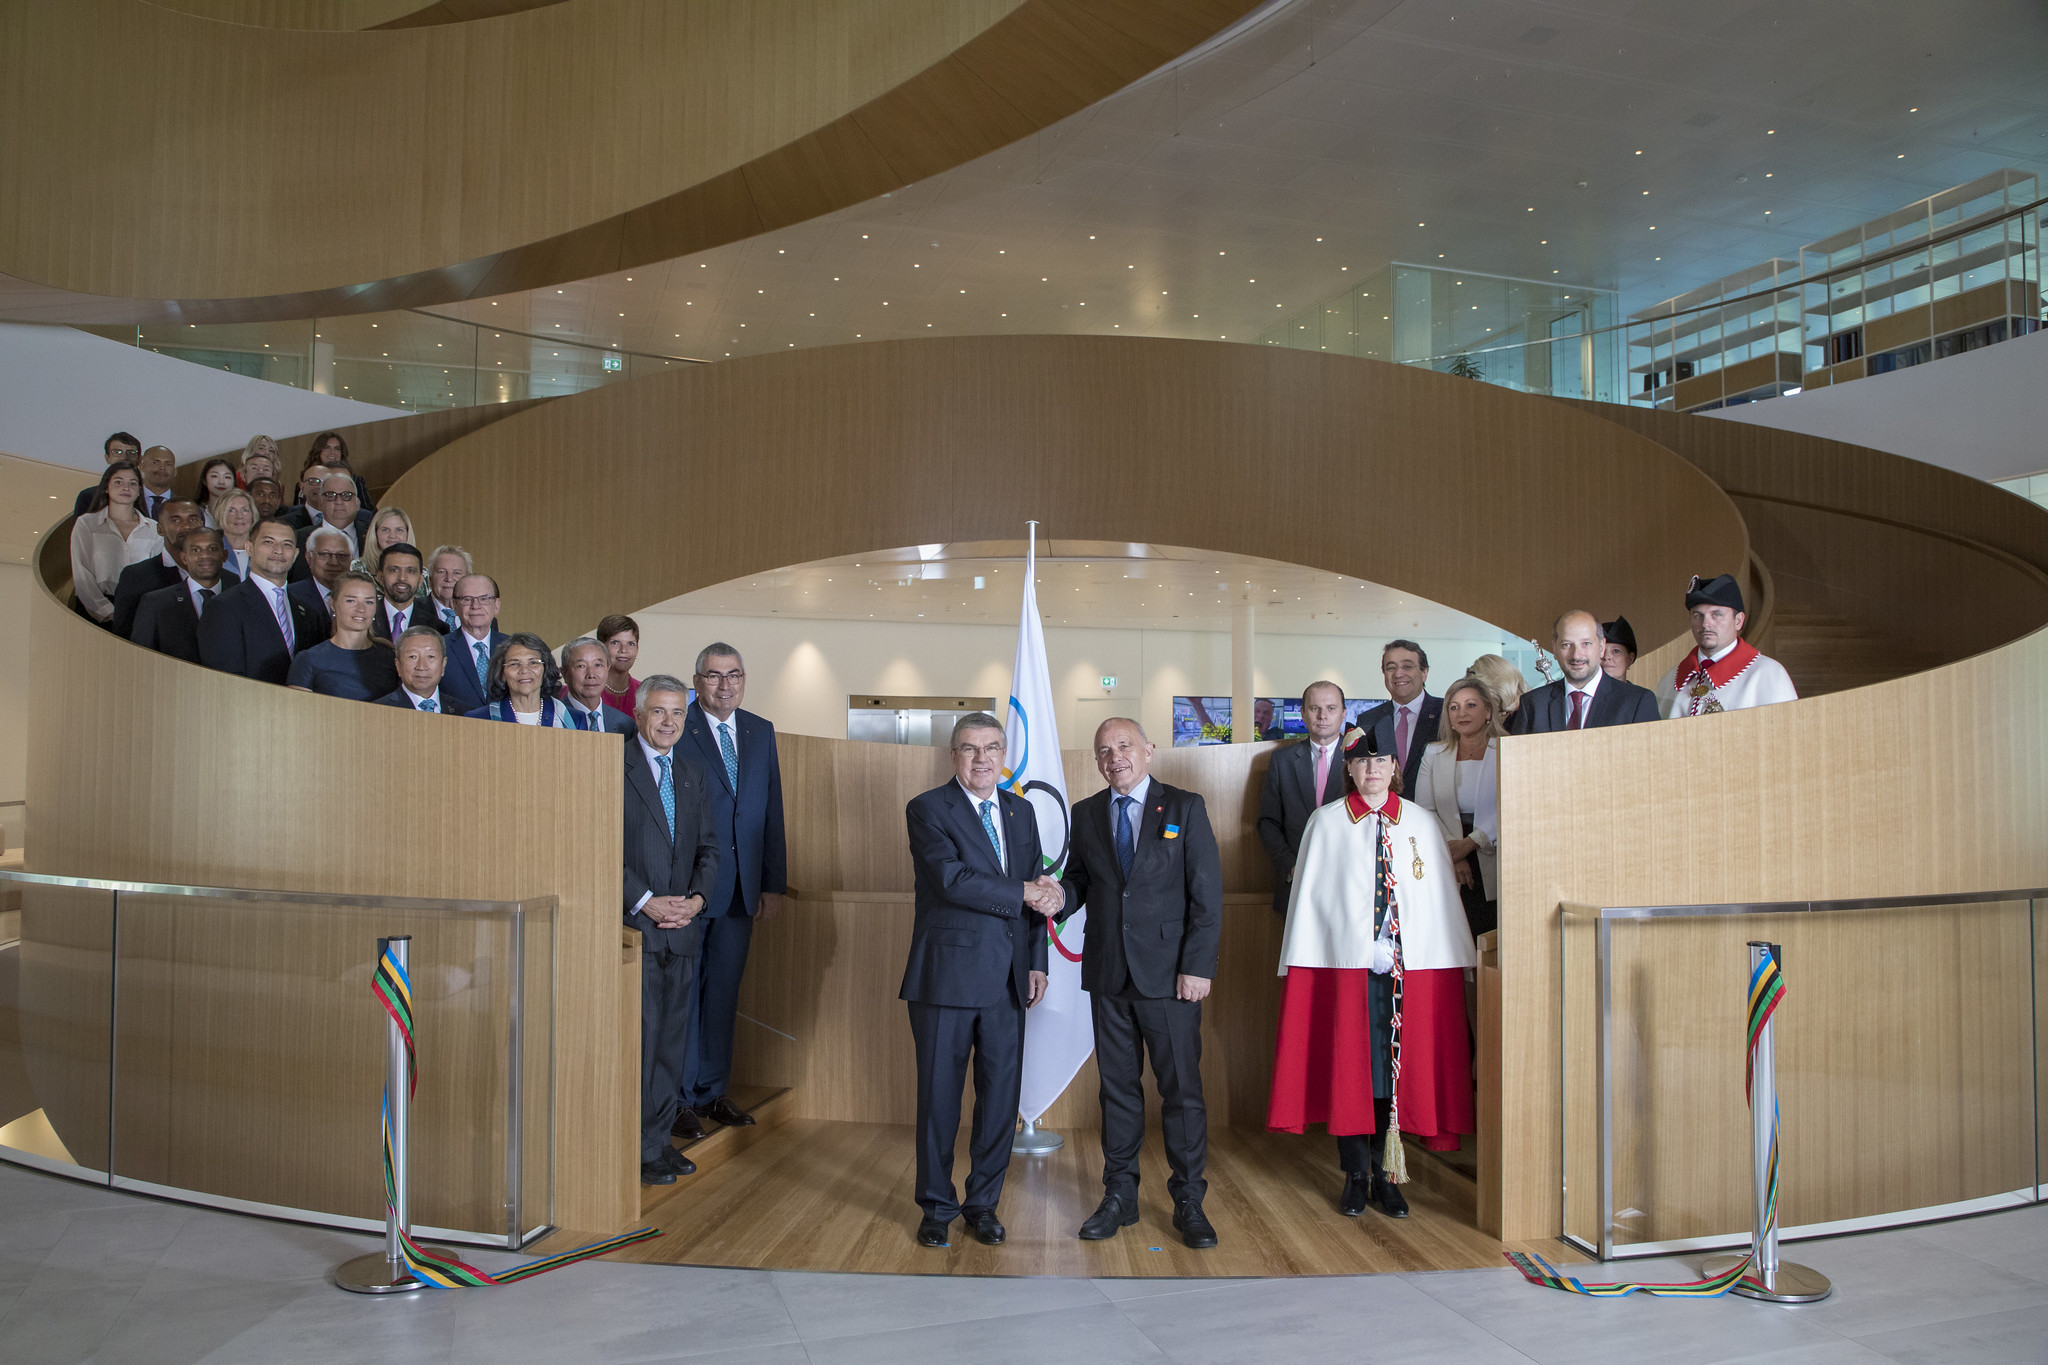 The IOC President cut the ribbon with Ueli Maurer, President of Switzerland ©IOC